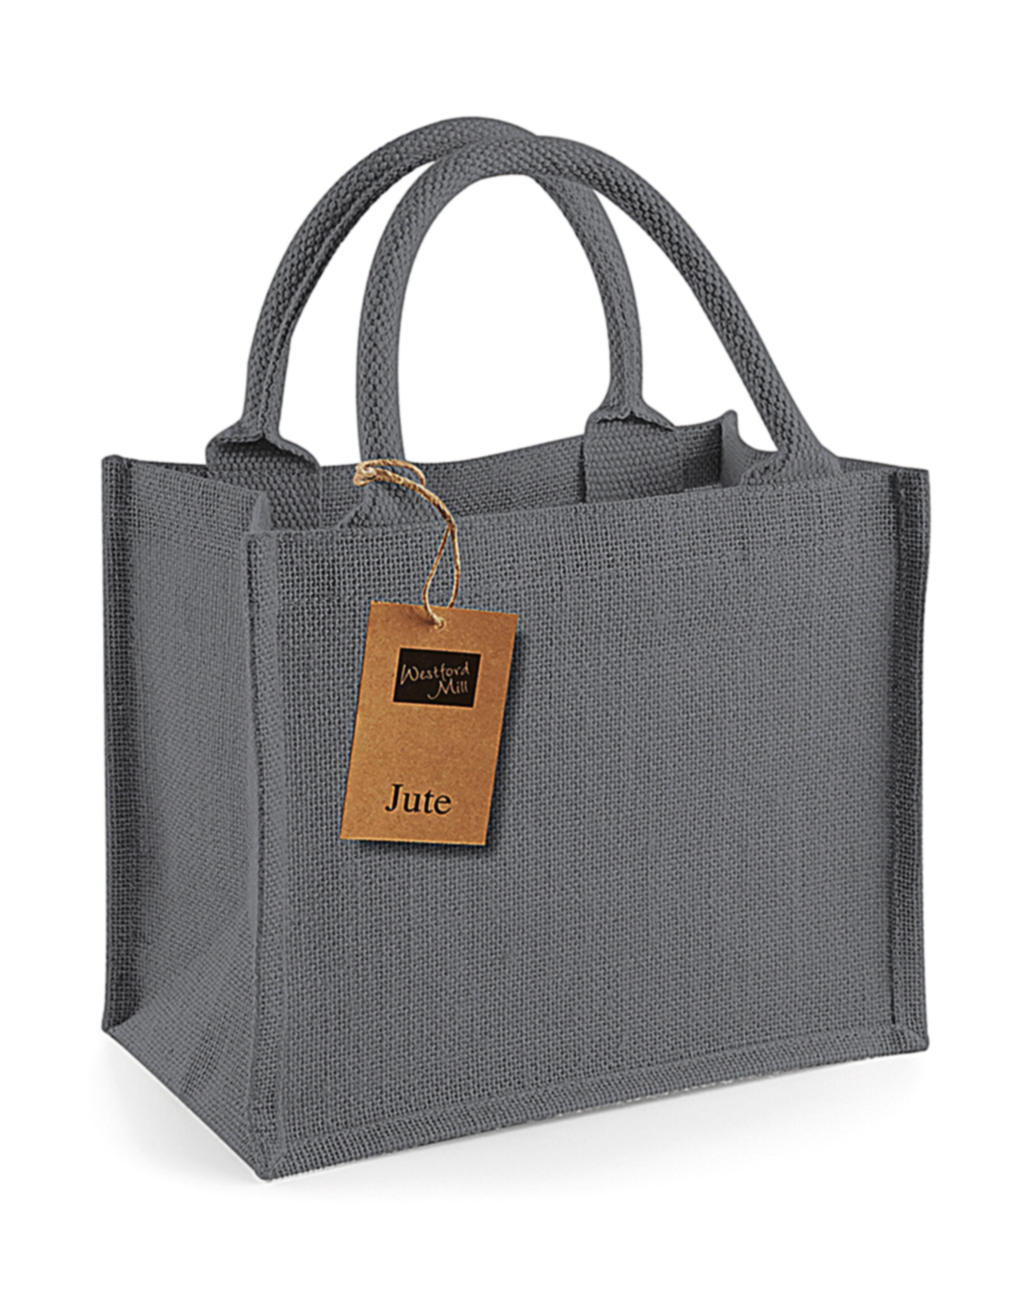 Taška Jute Mini Gift - graphite grey/graphite grey